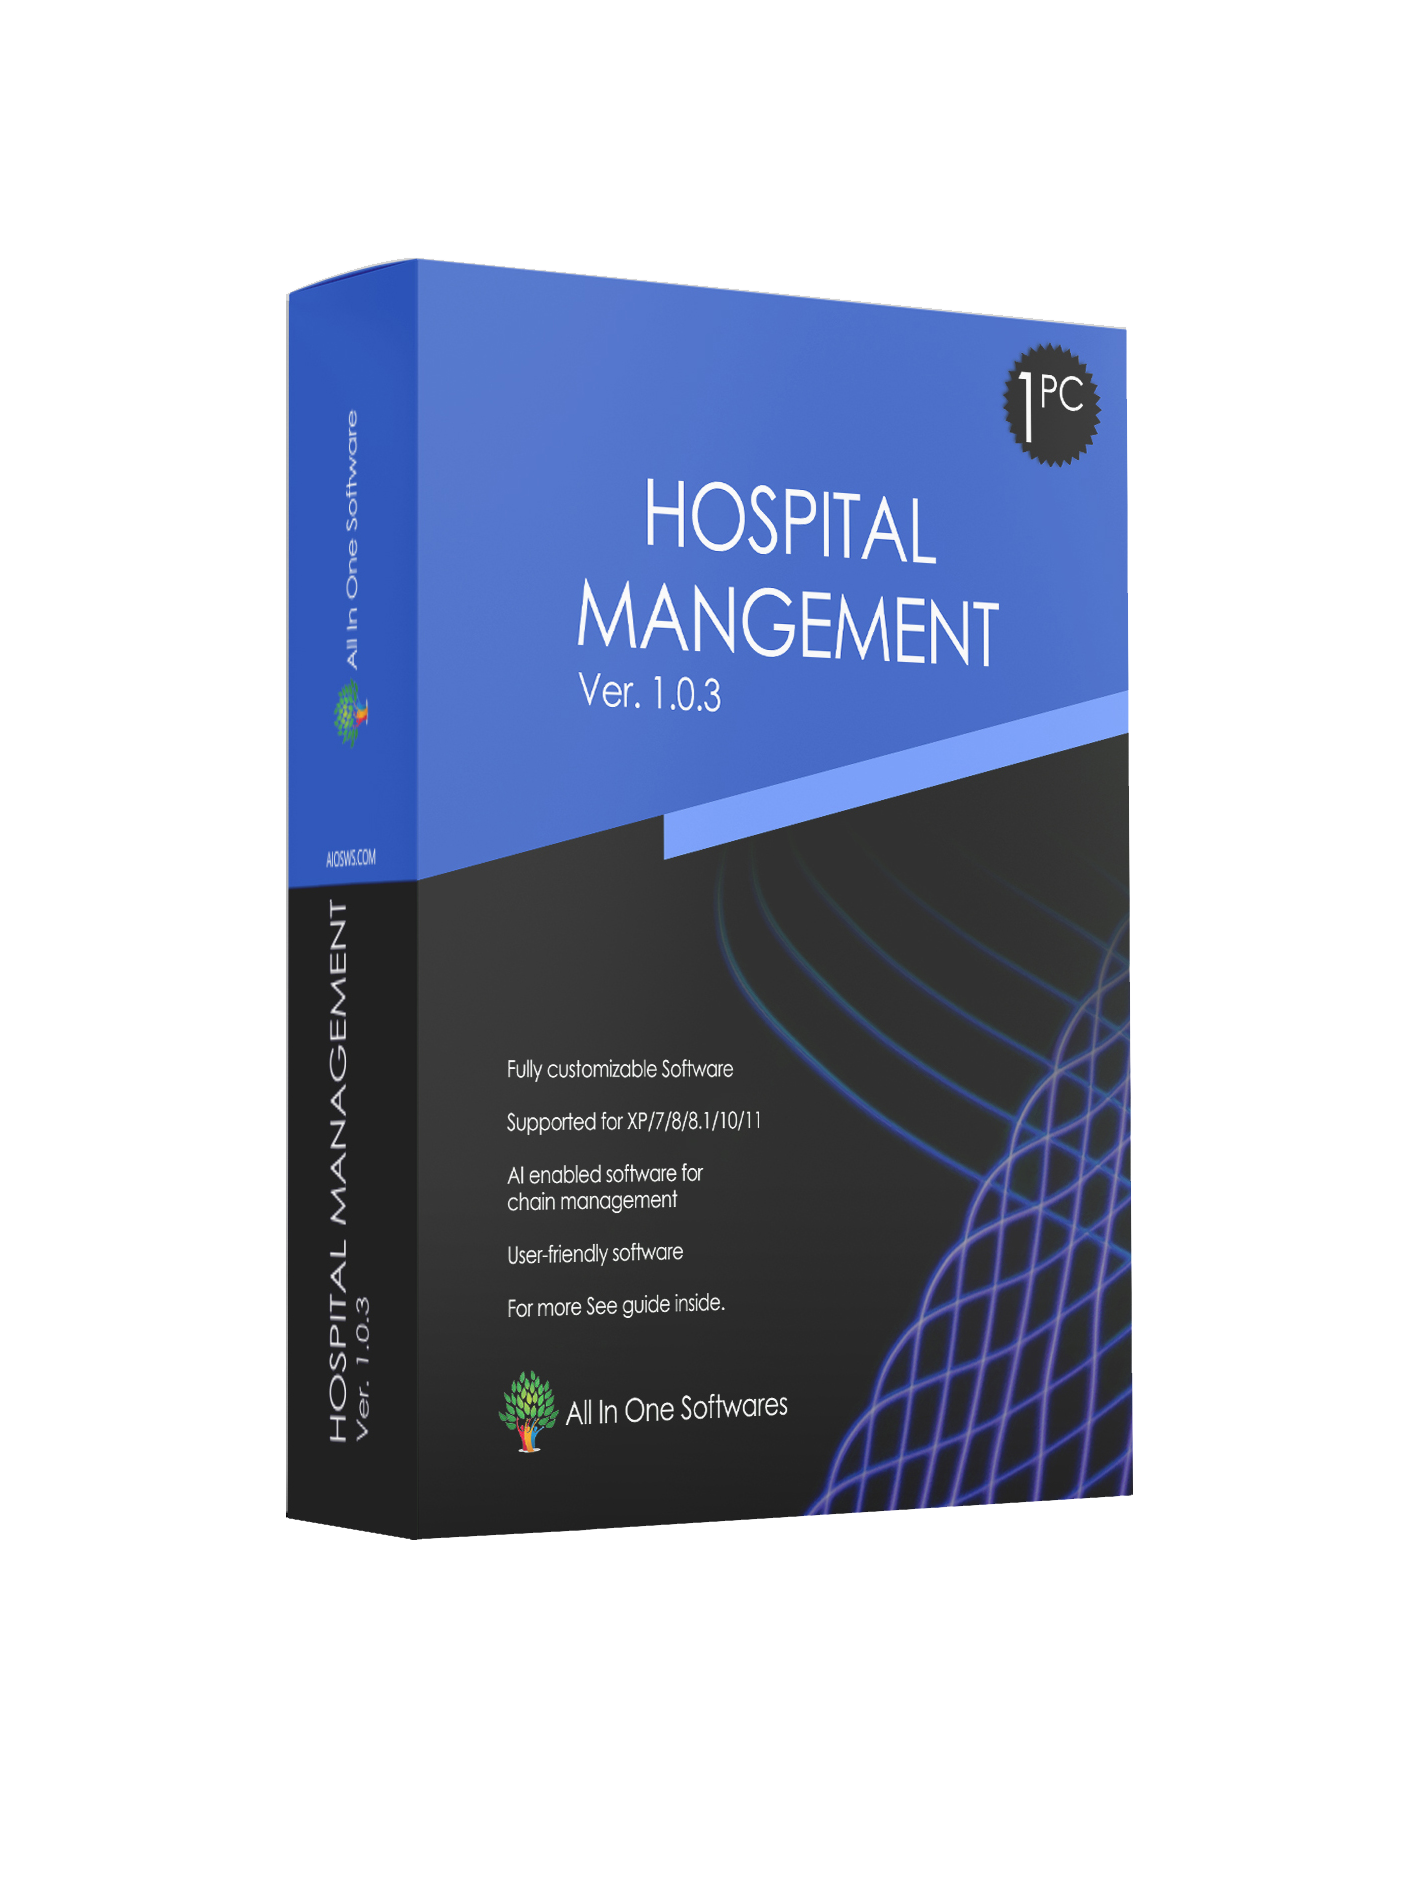 Hospital management